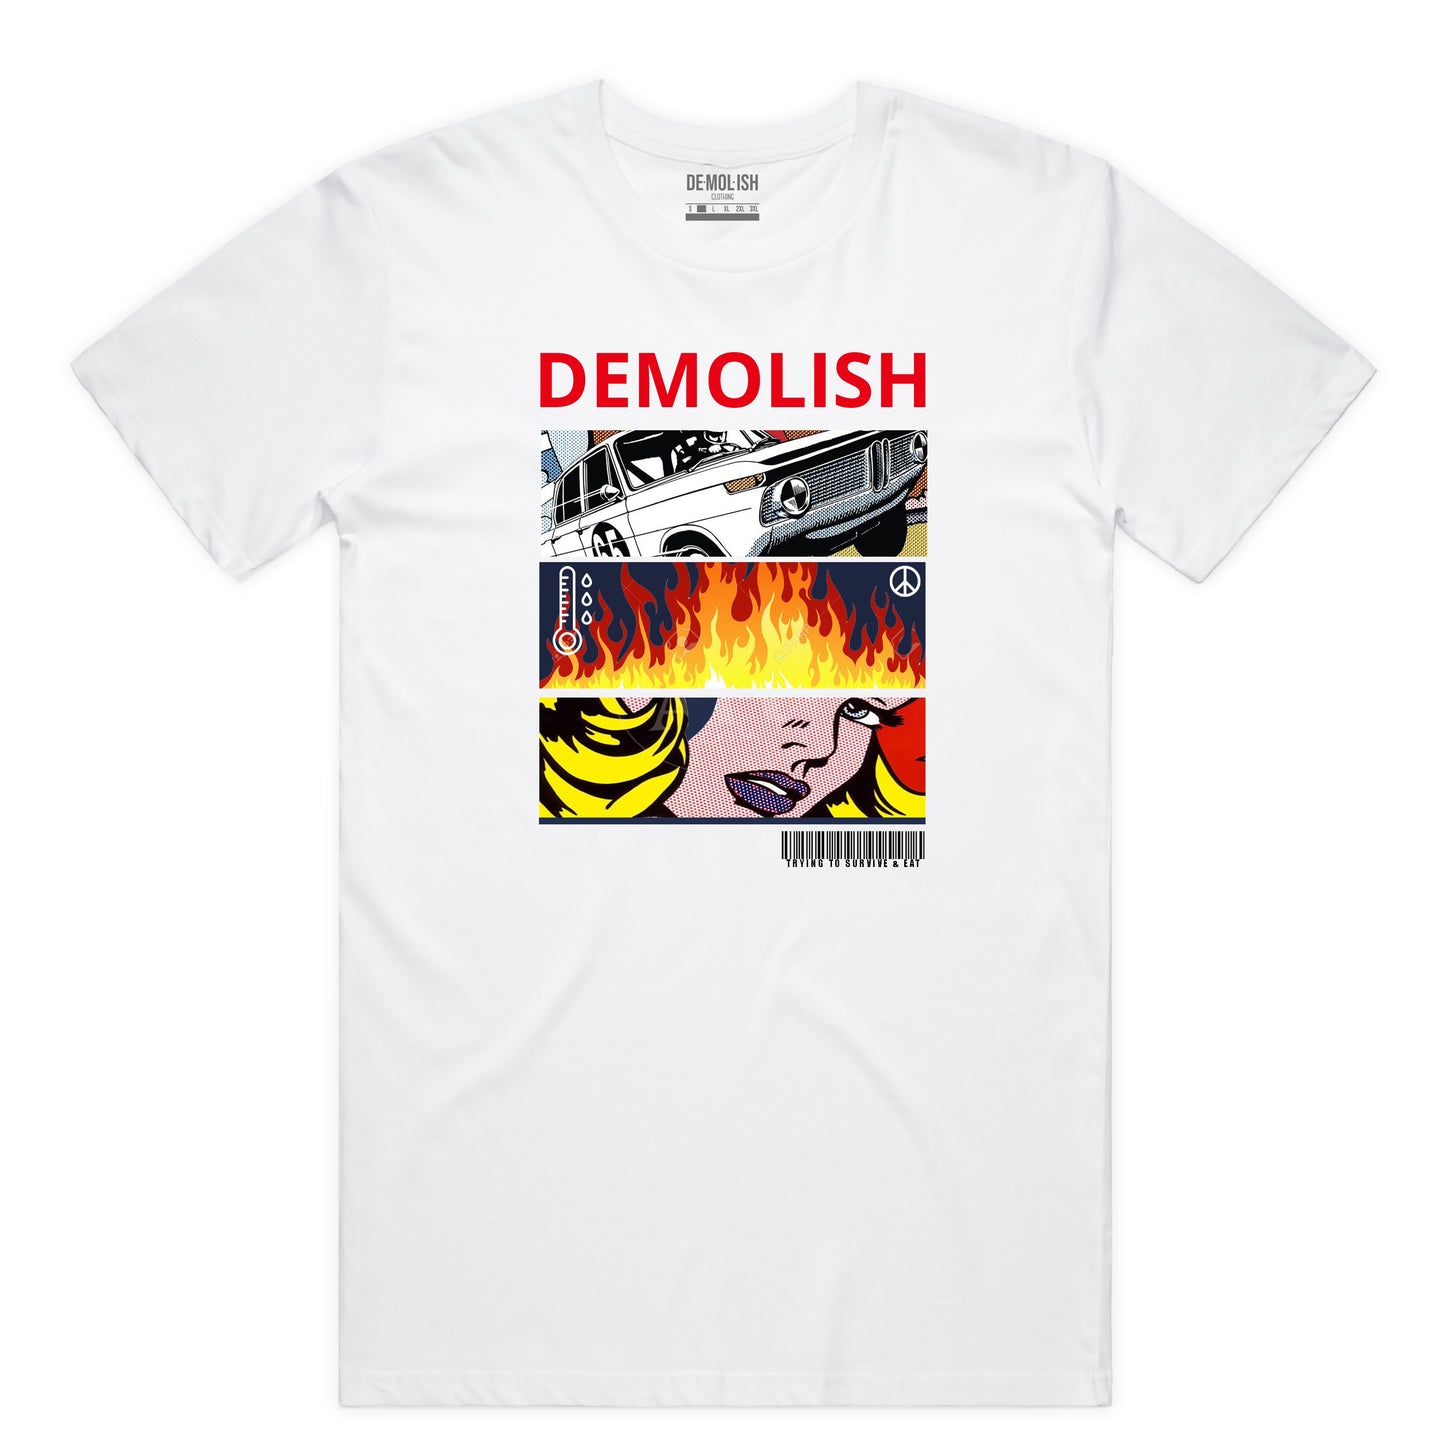 Demolish Pop Art Tee (White/Red) /D9